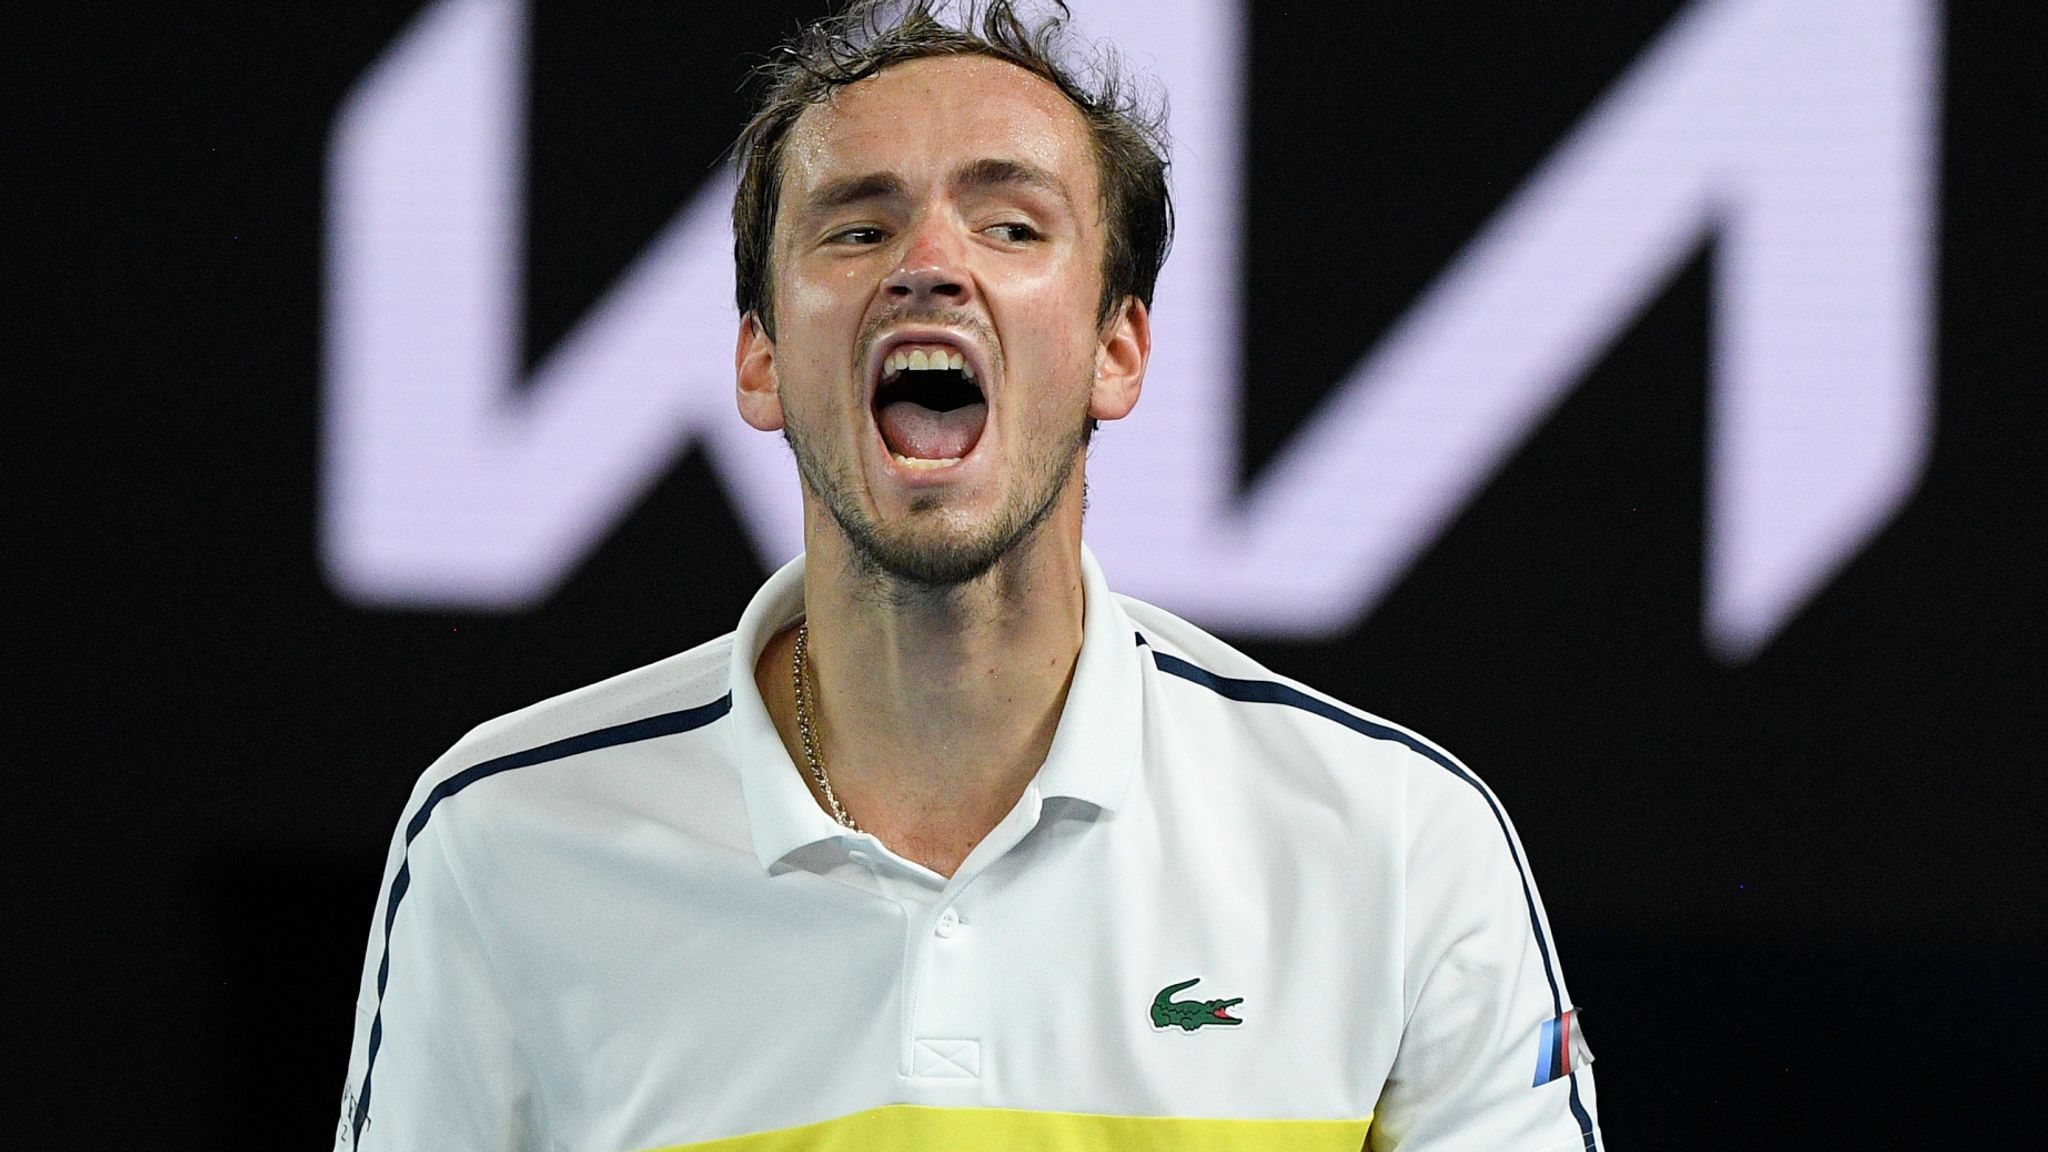 Australian Open Daniil Medvedev sets up final against Novak Djokovic after crushing Stefanos Tsitsipas Tennis News Sky Sports